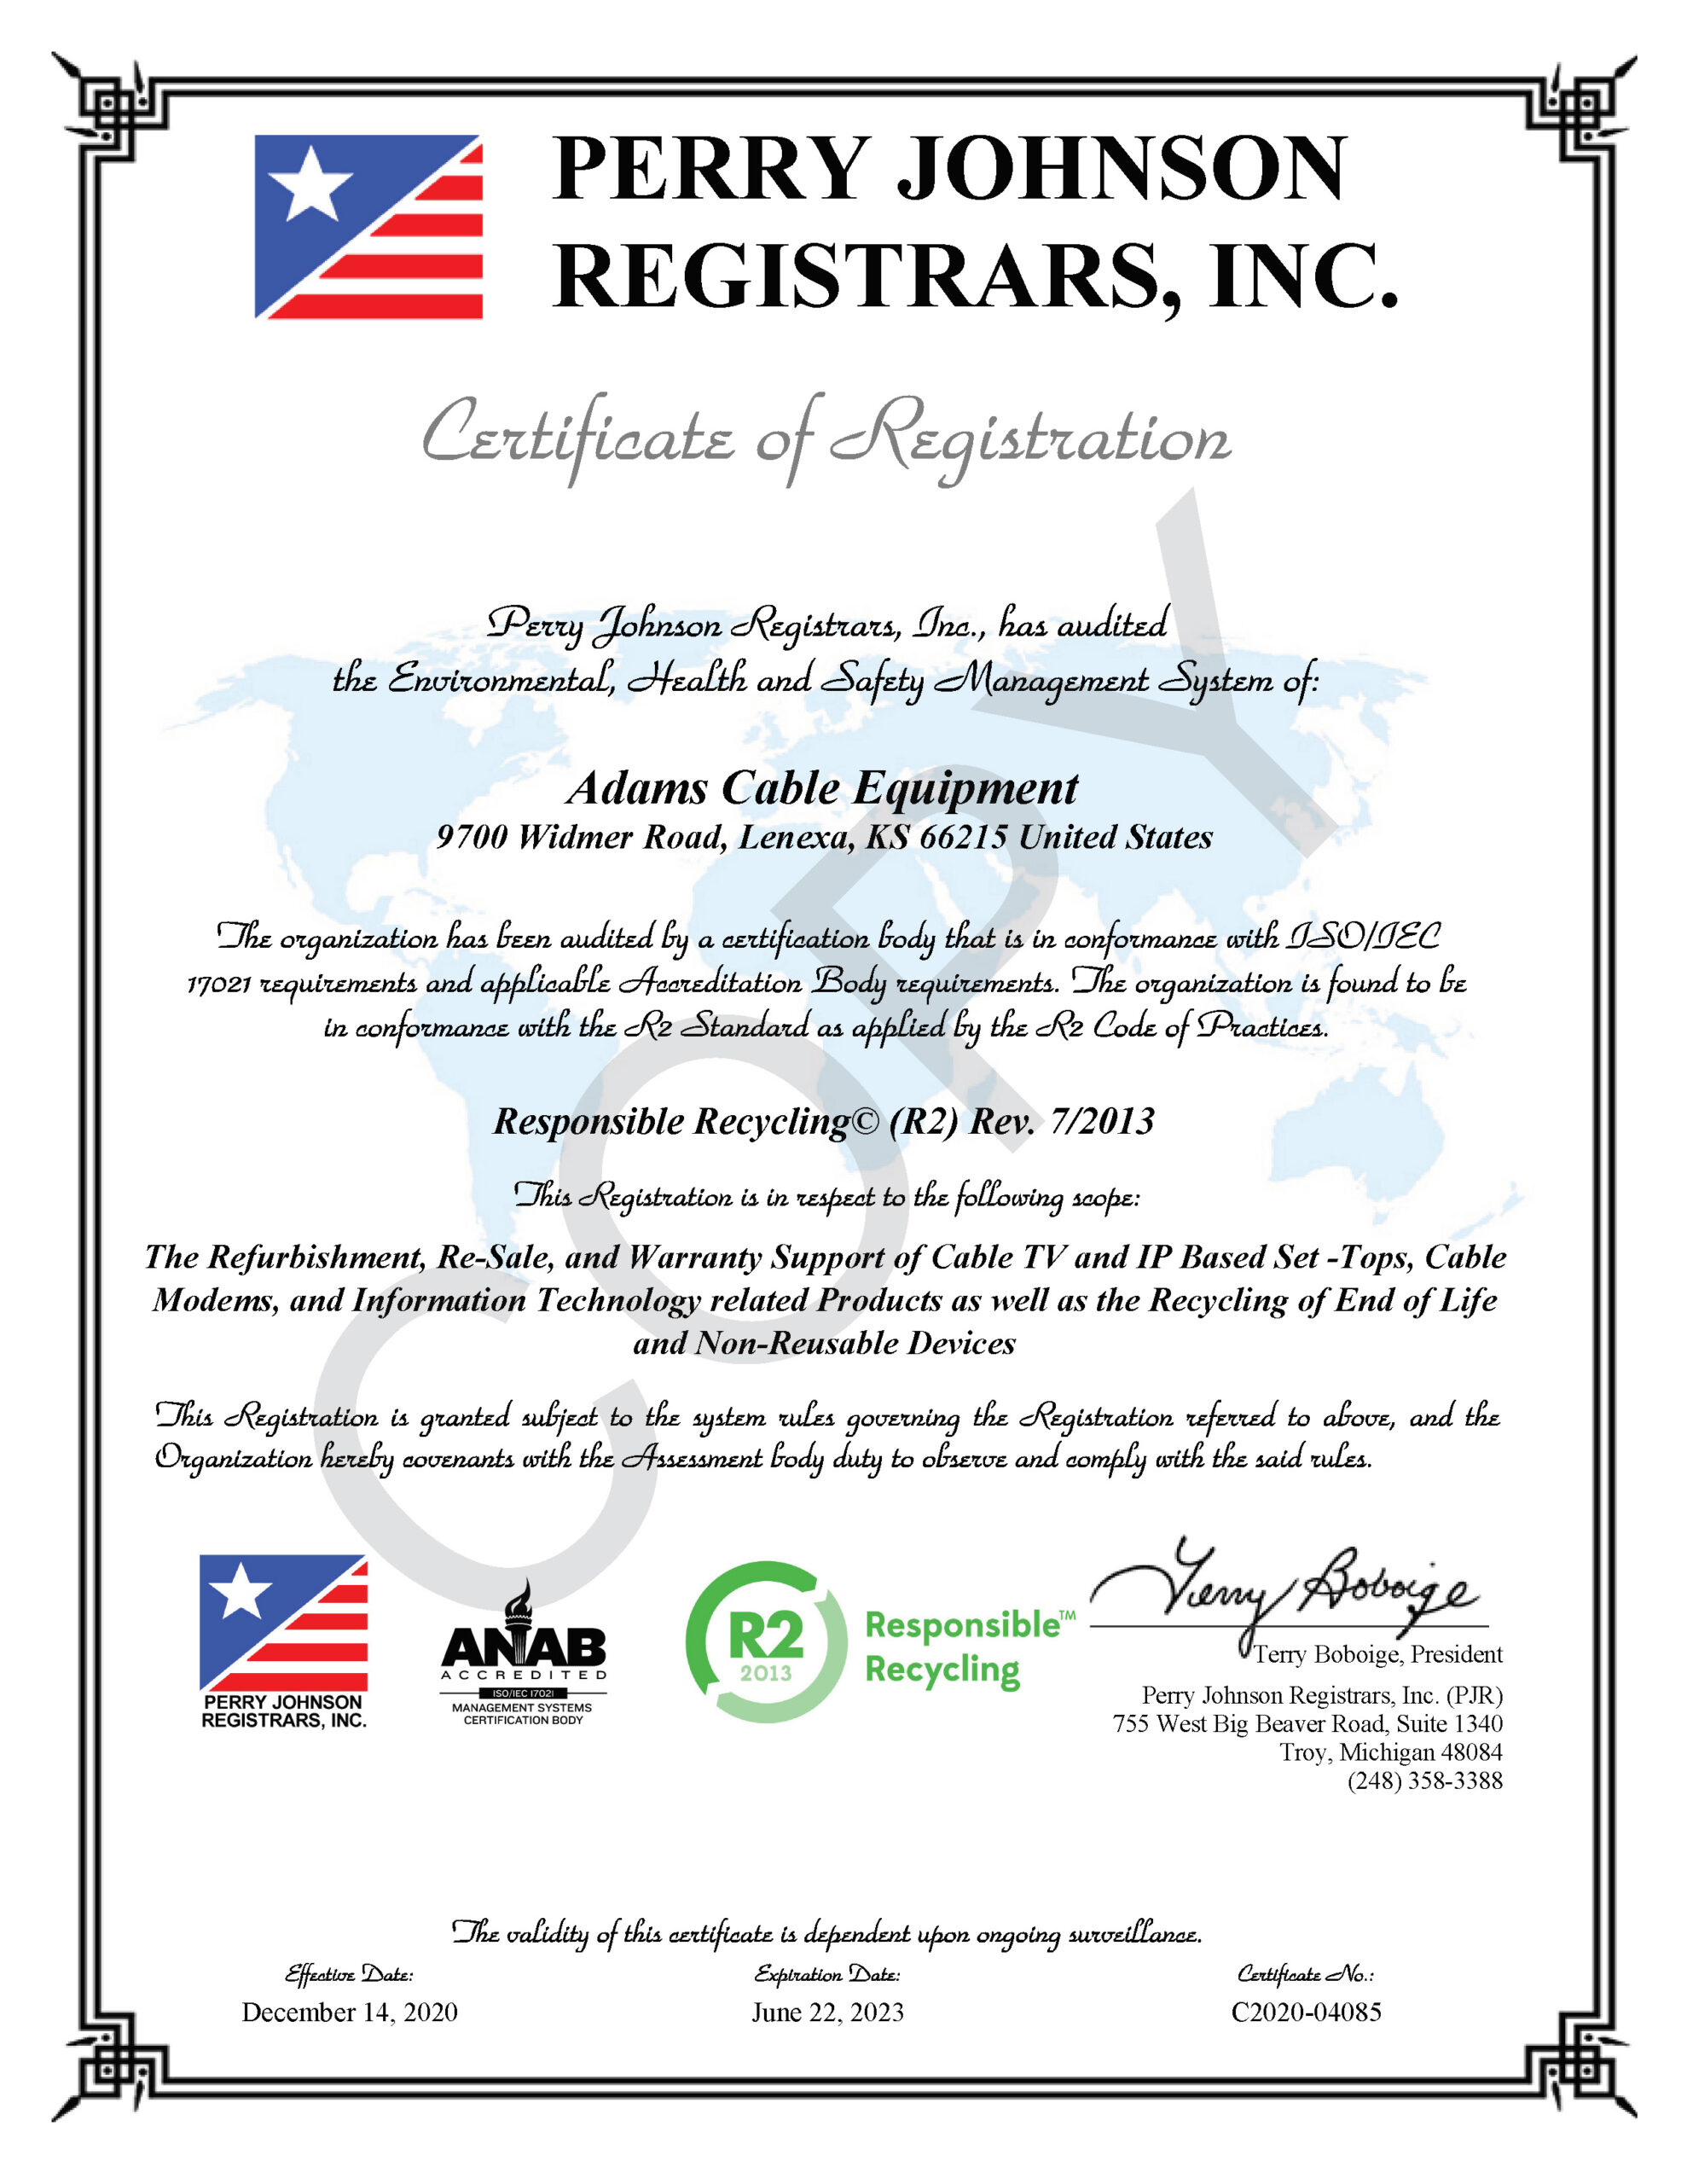 Adams Cable Equipment R2 Certificate